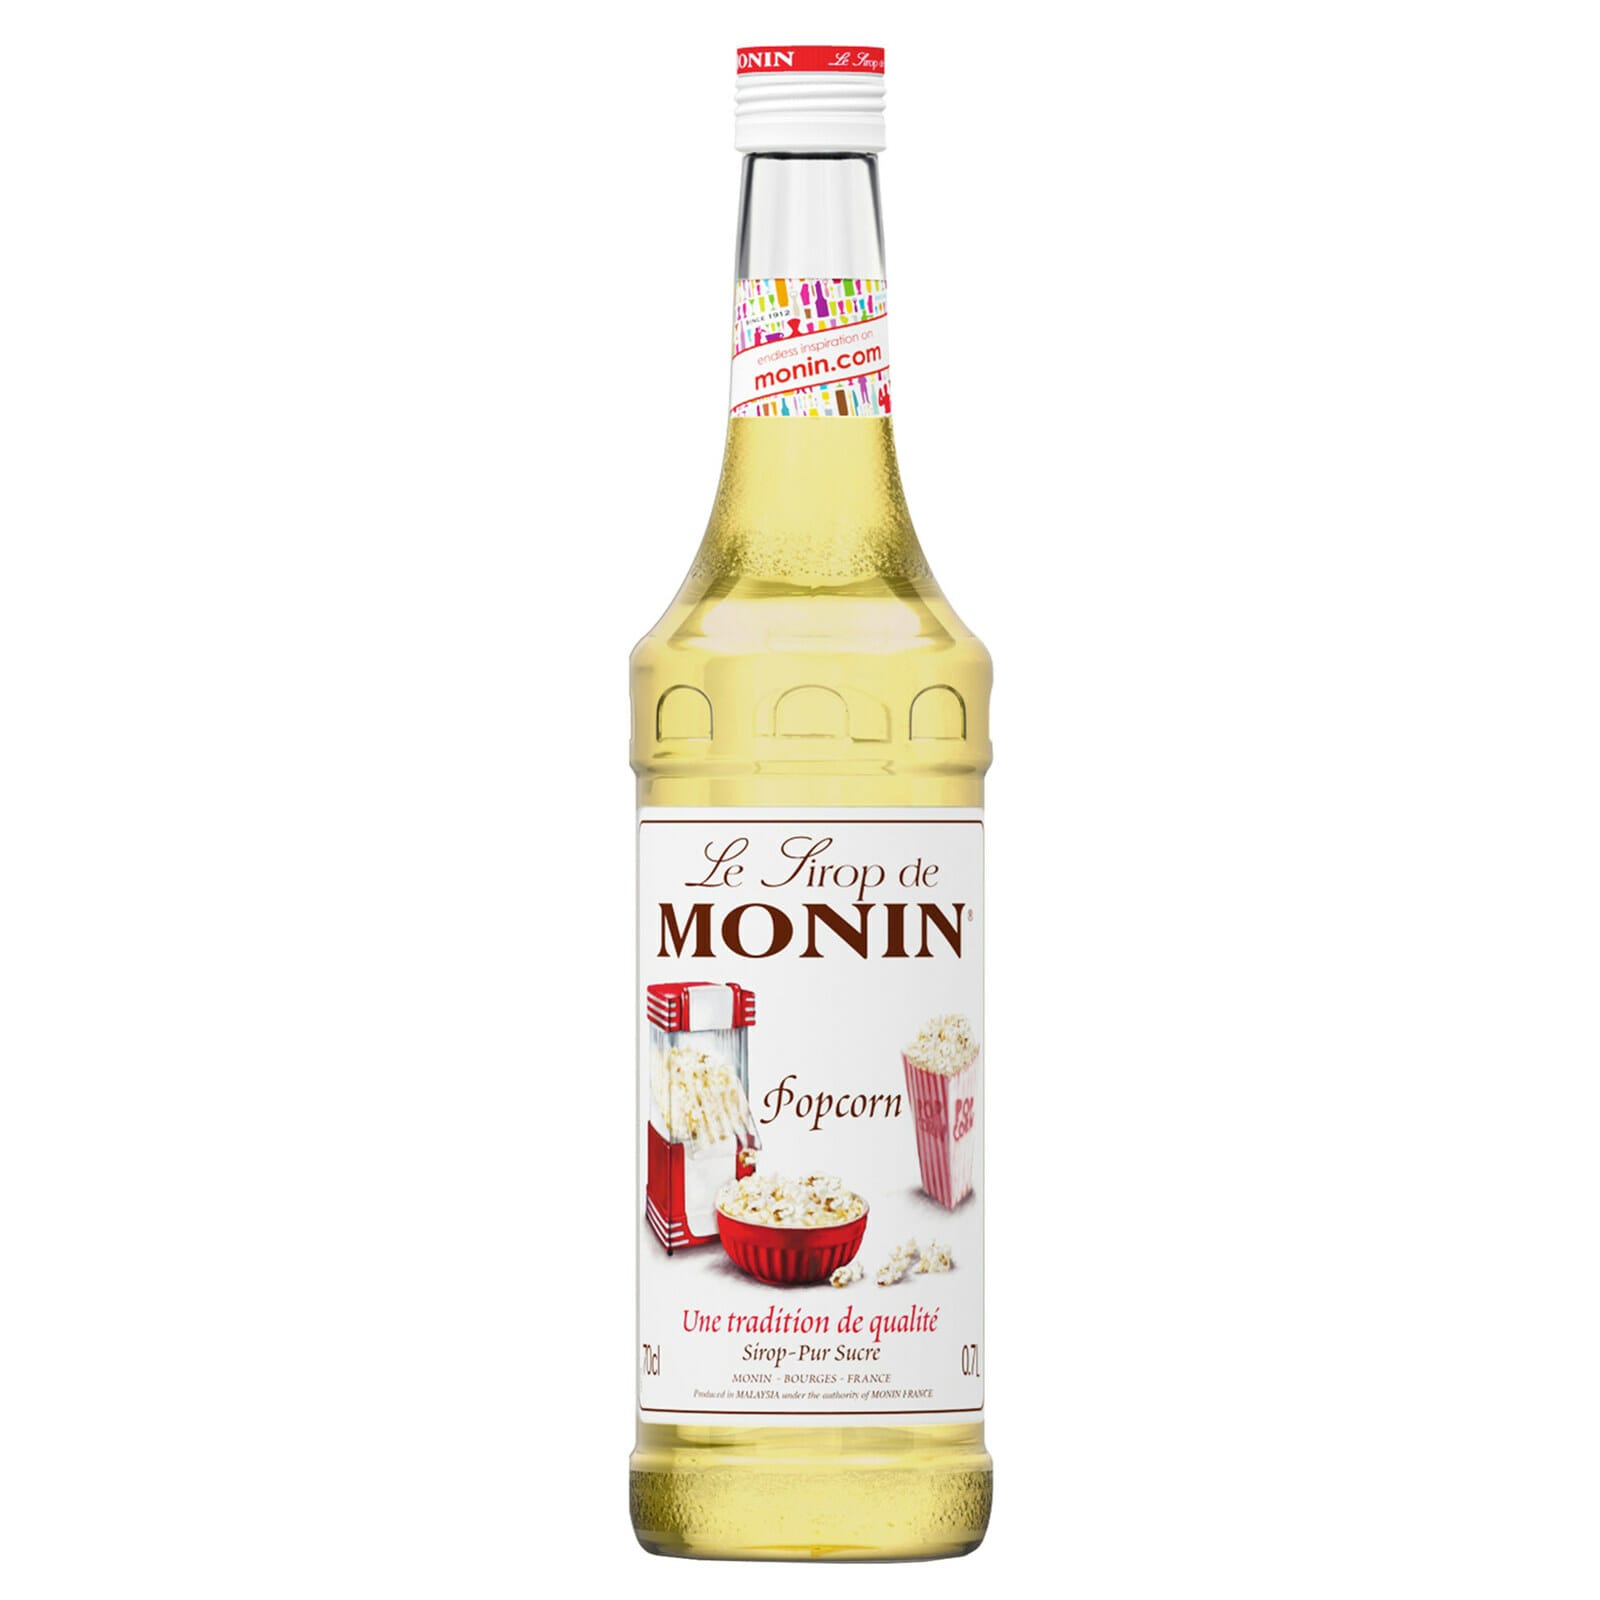 Monin Pop Corn Syrup 700ml